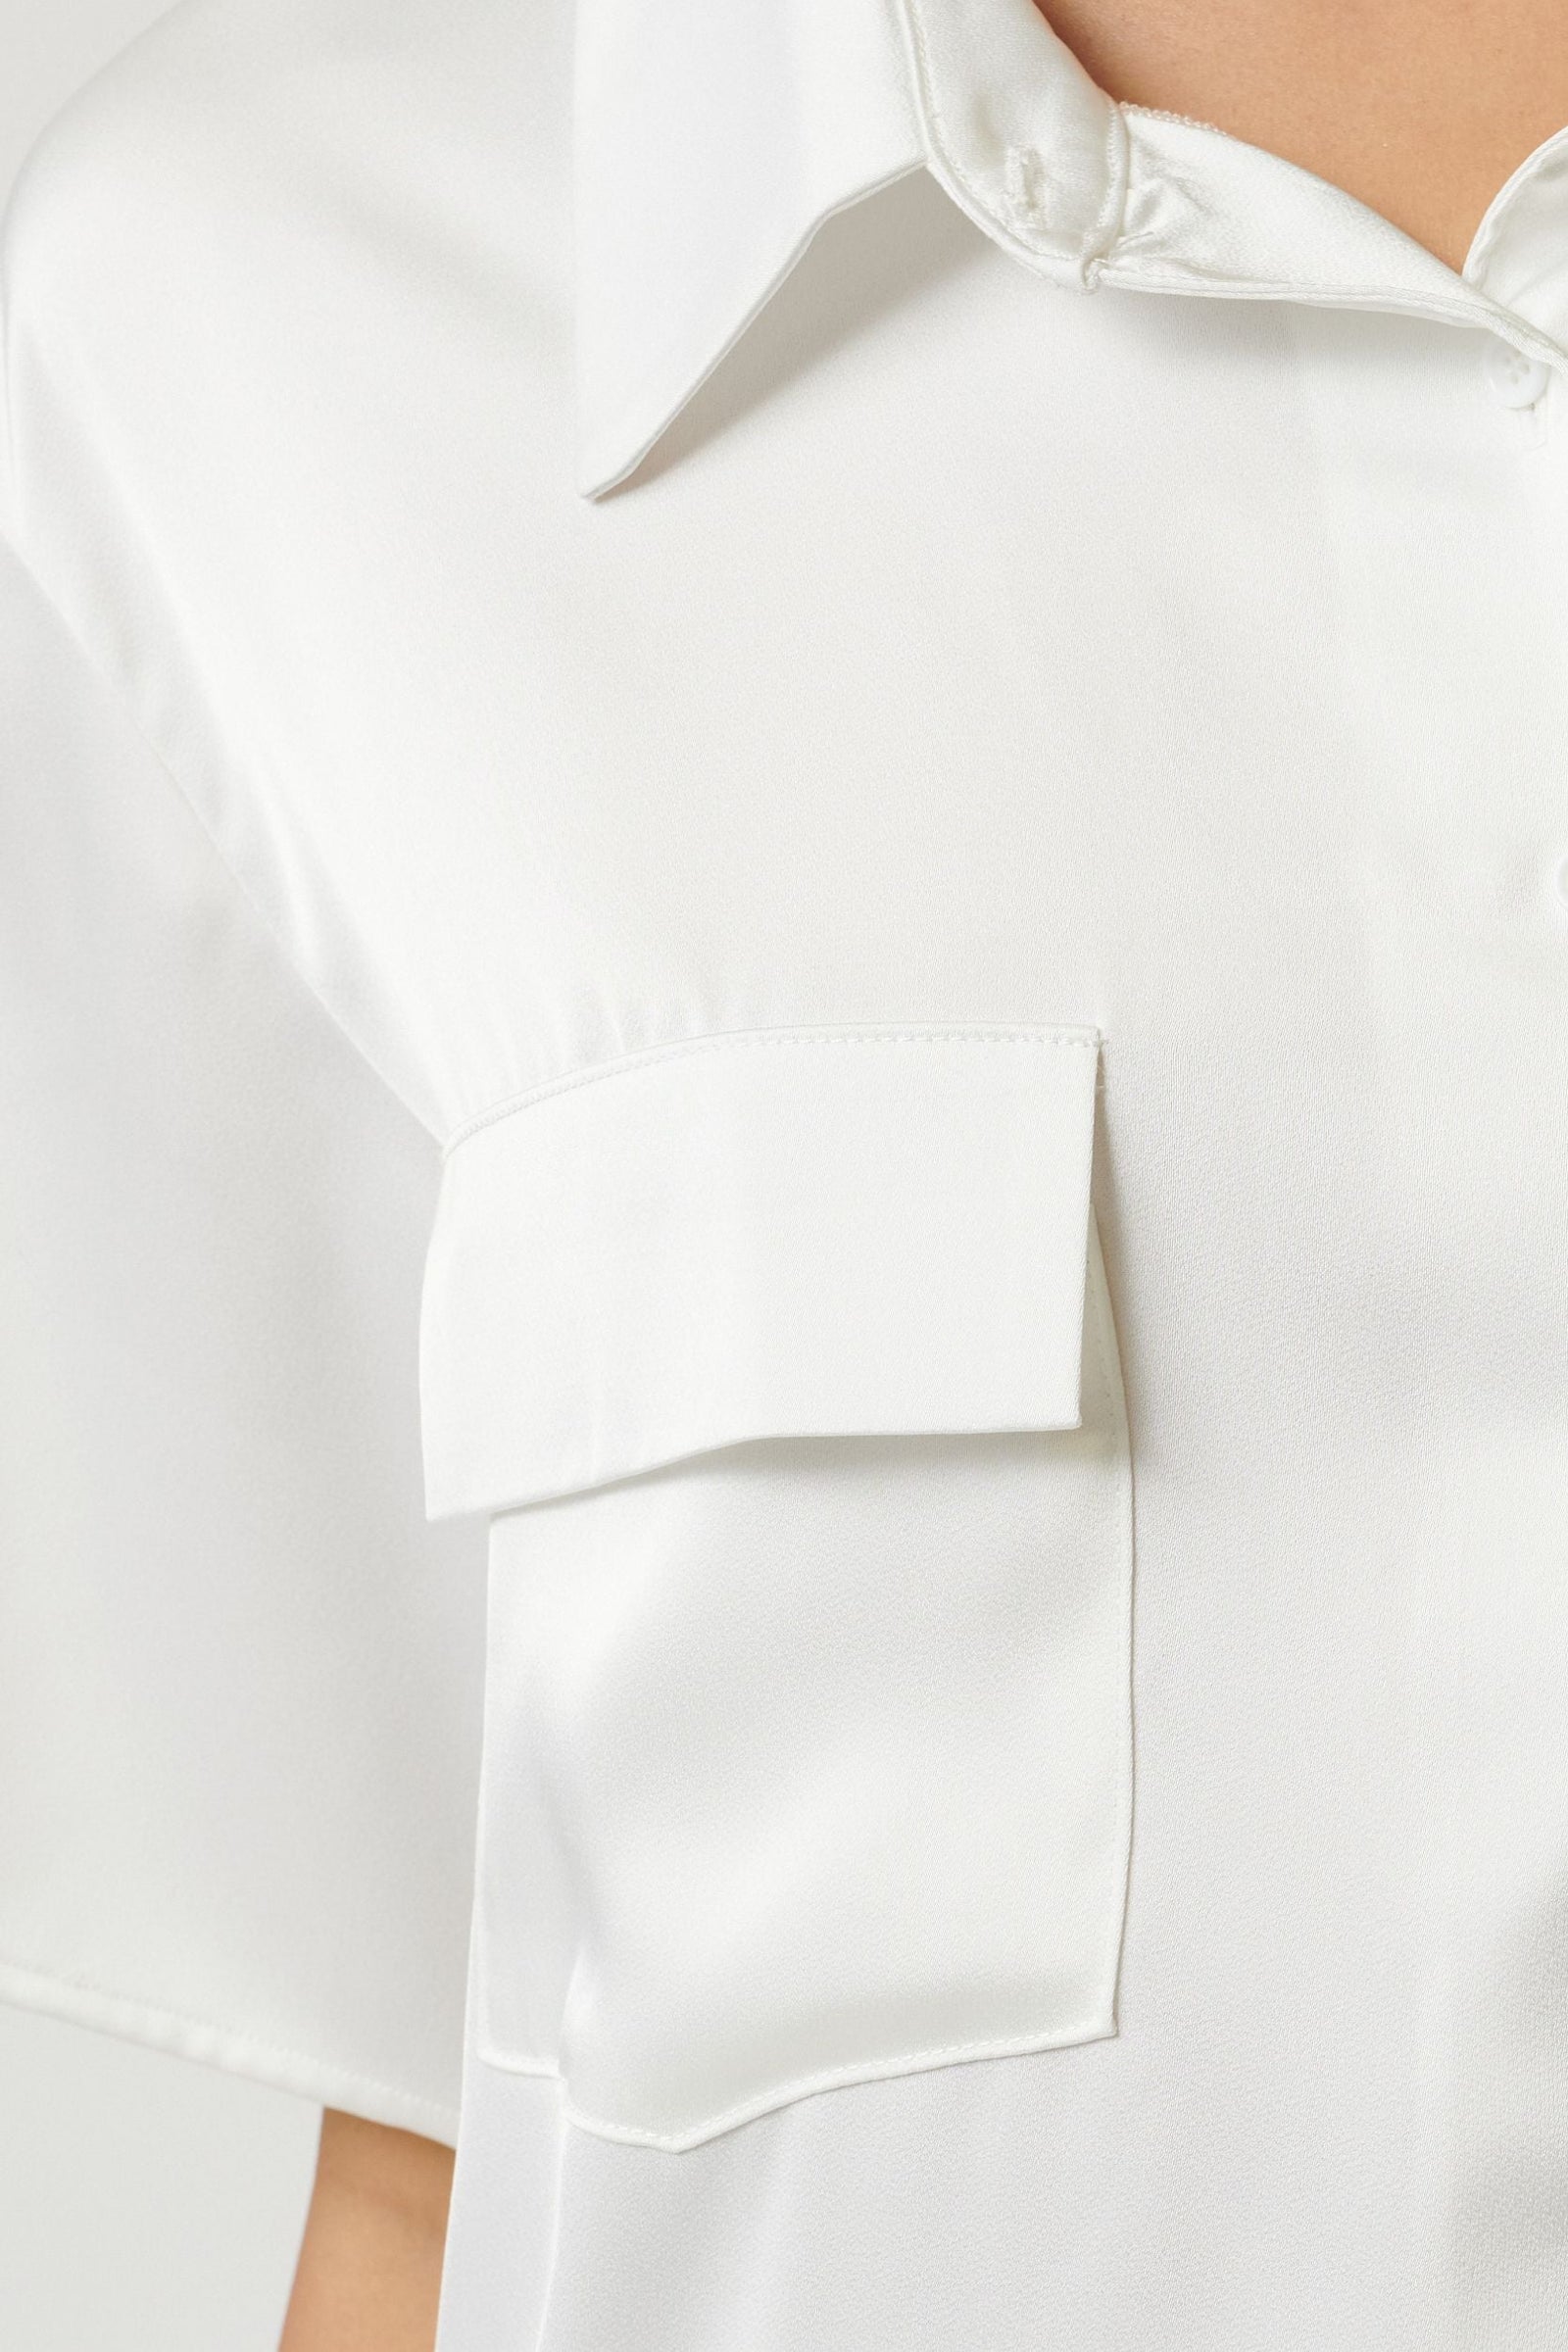 Kat The Label | Gracie Short Sleeve Shirt - Ivory